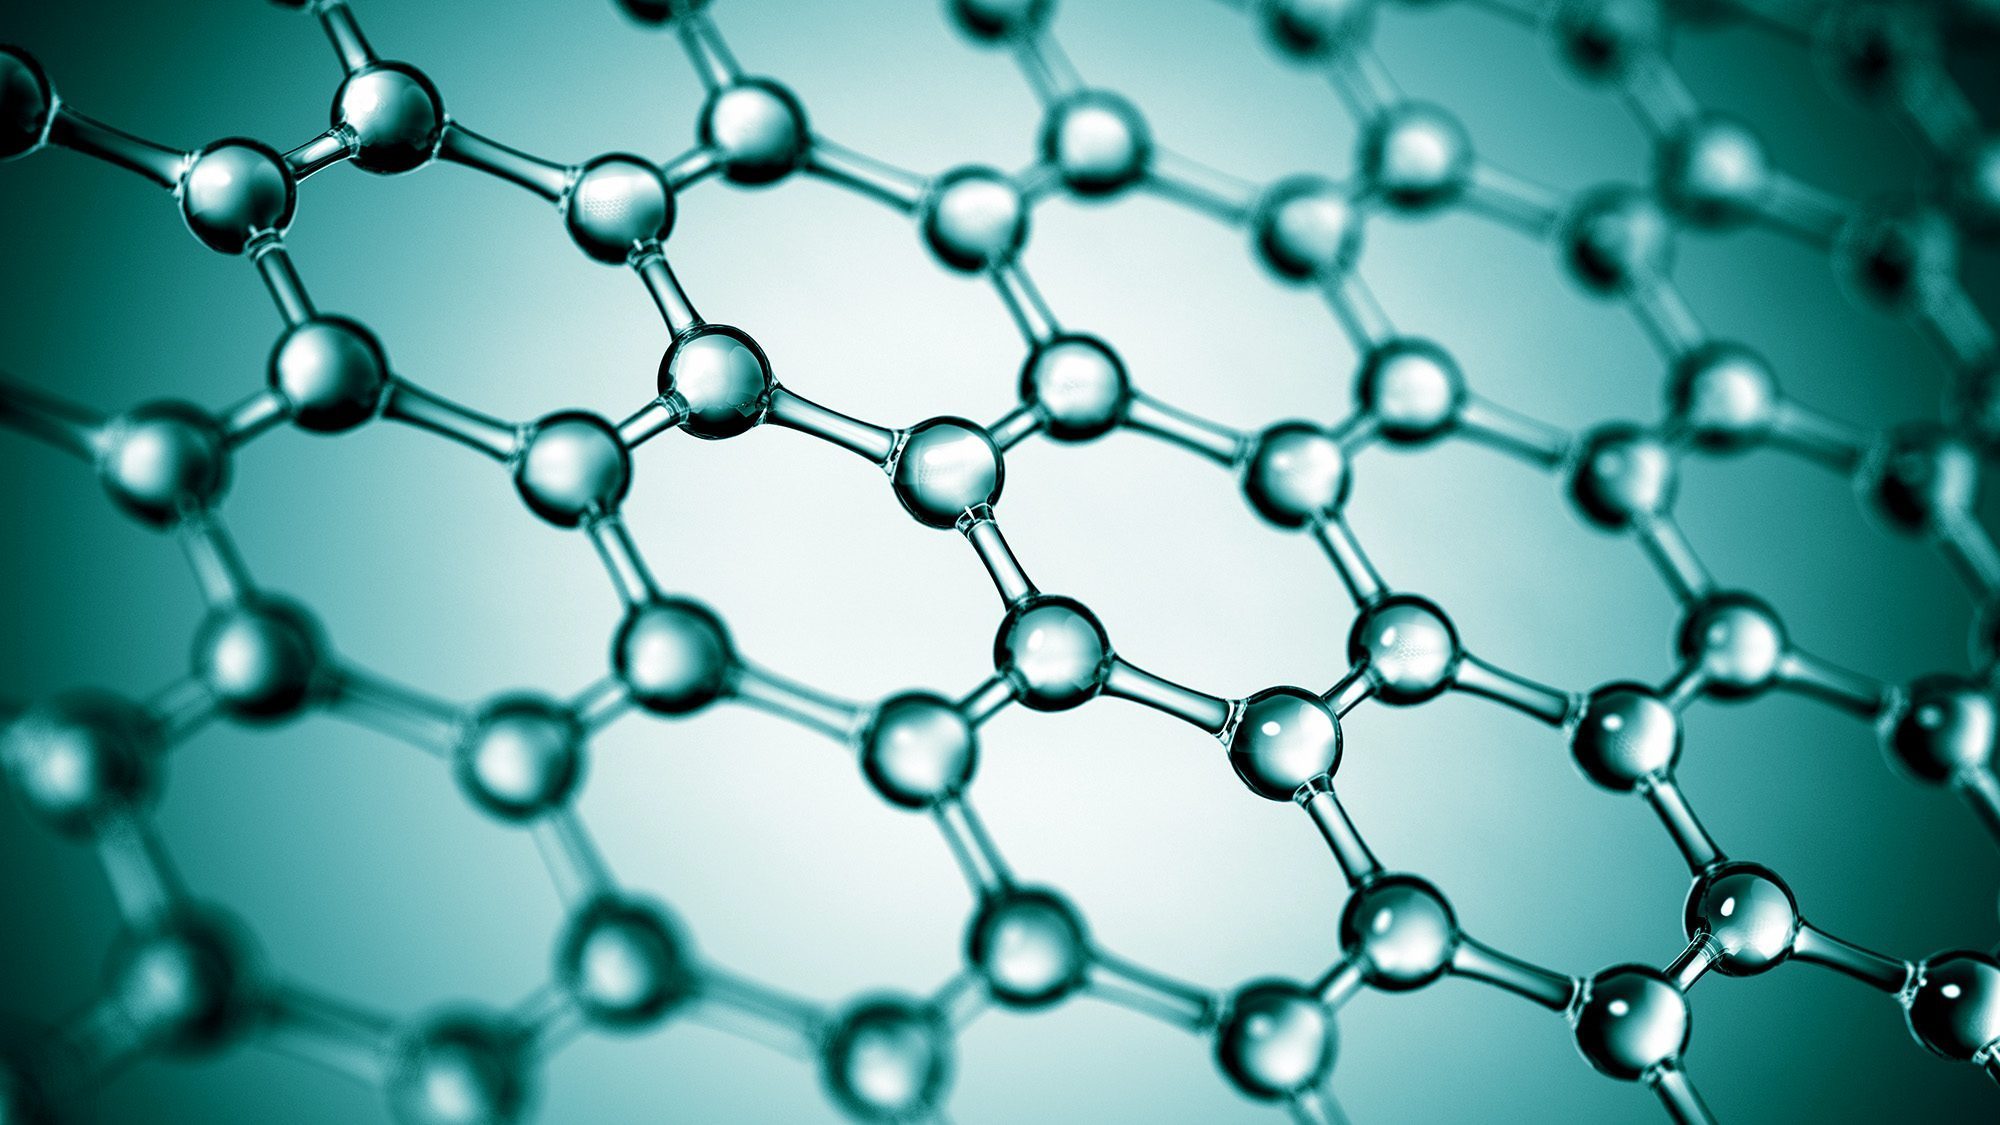 Graphene and carbon nanotubes